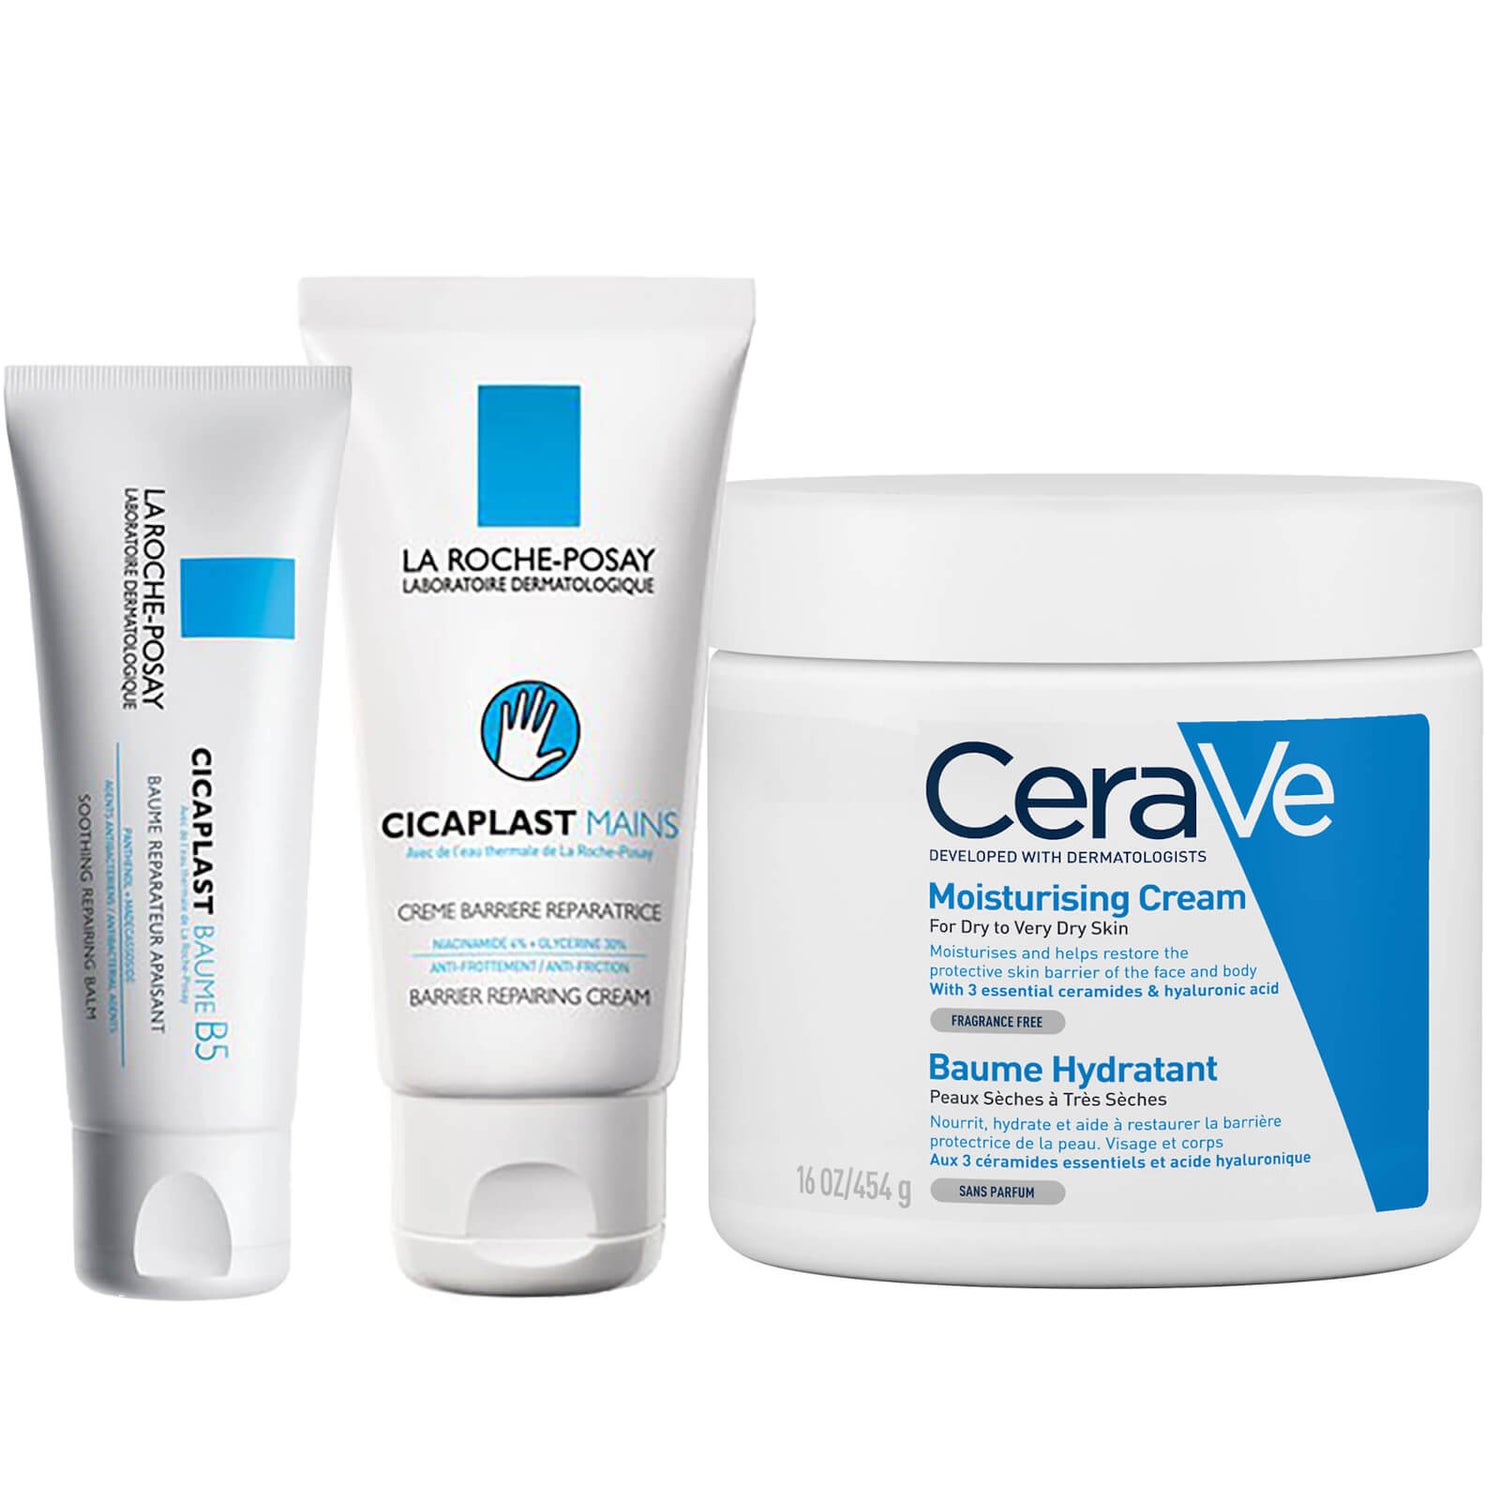 Ultra-Hydrating Essentials Trio Expert Skin Routine Bundle